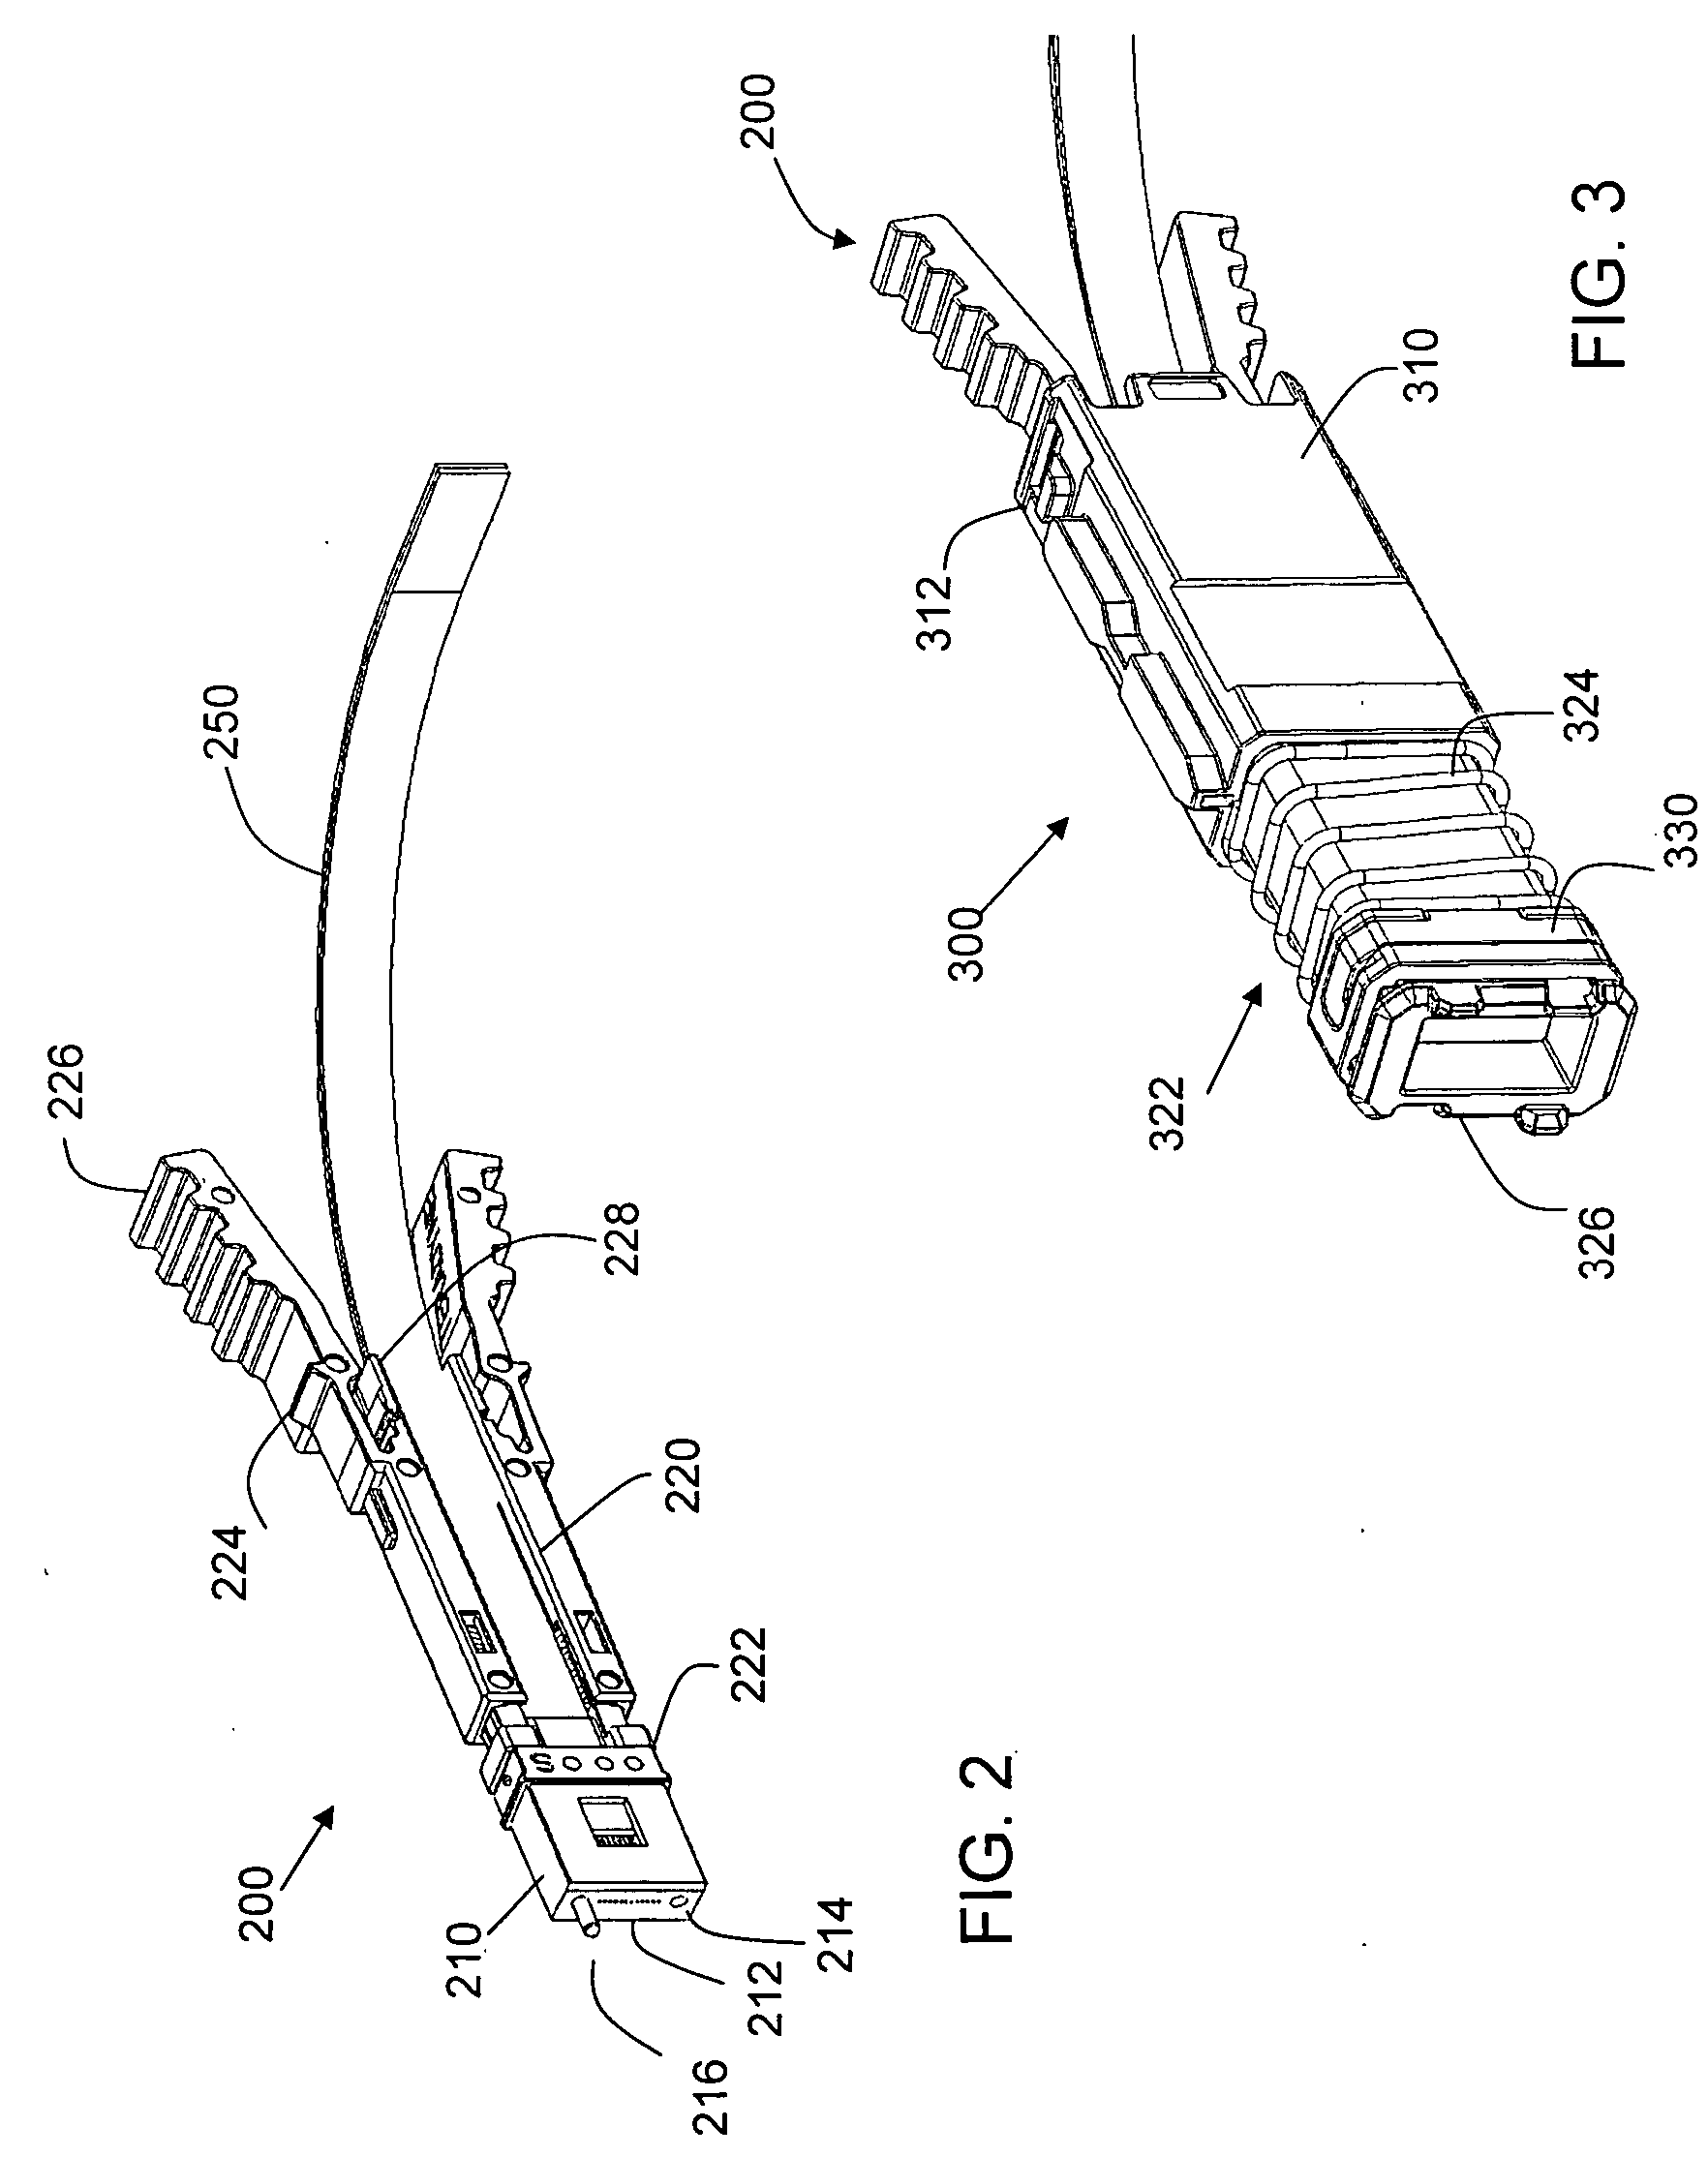 Modular fiber optic connector system